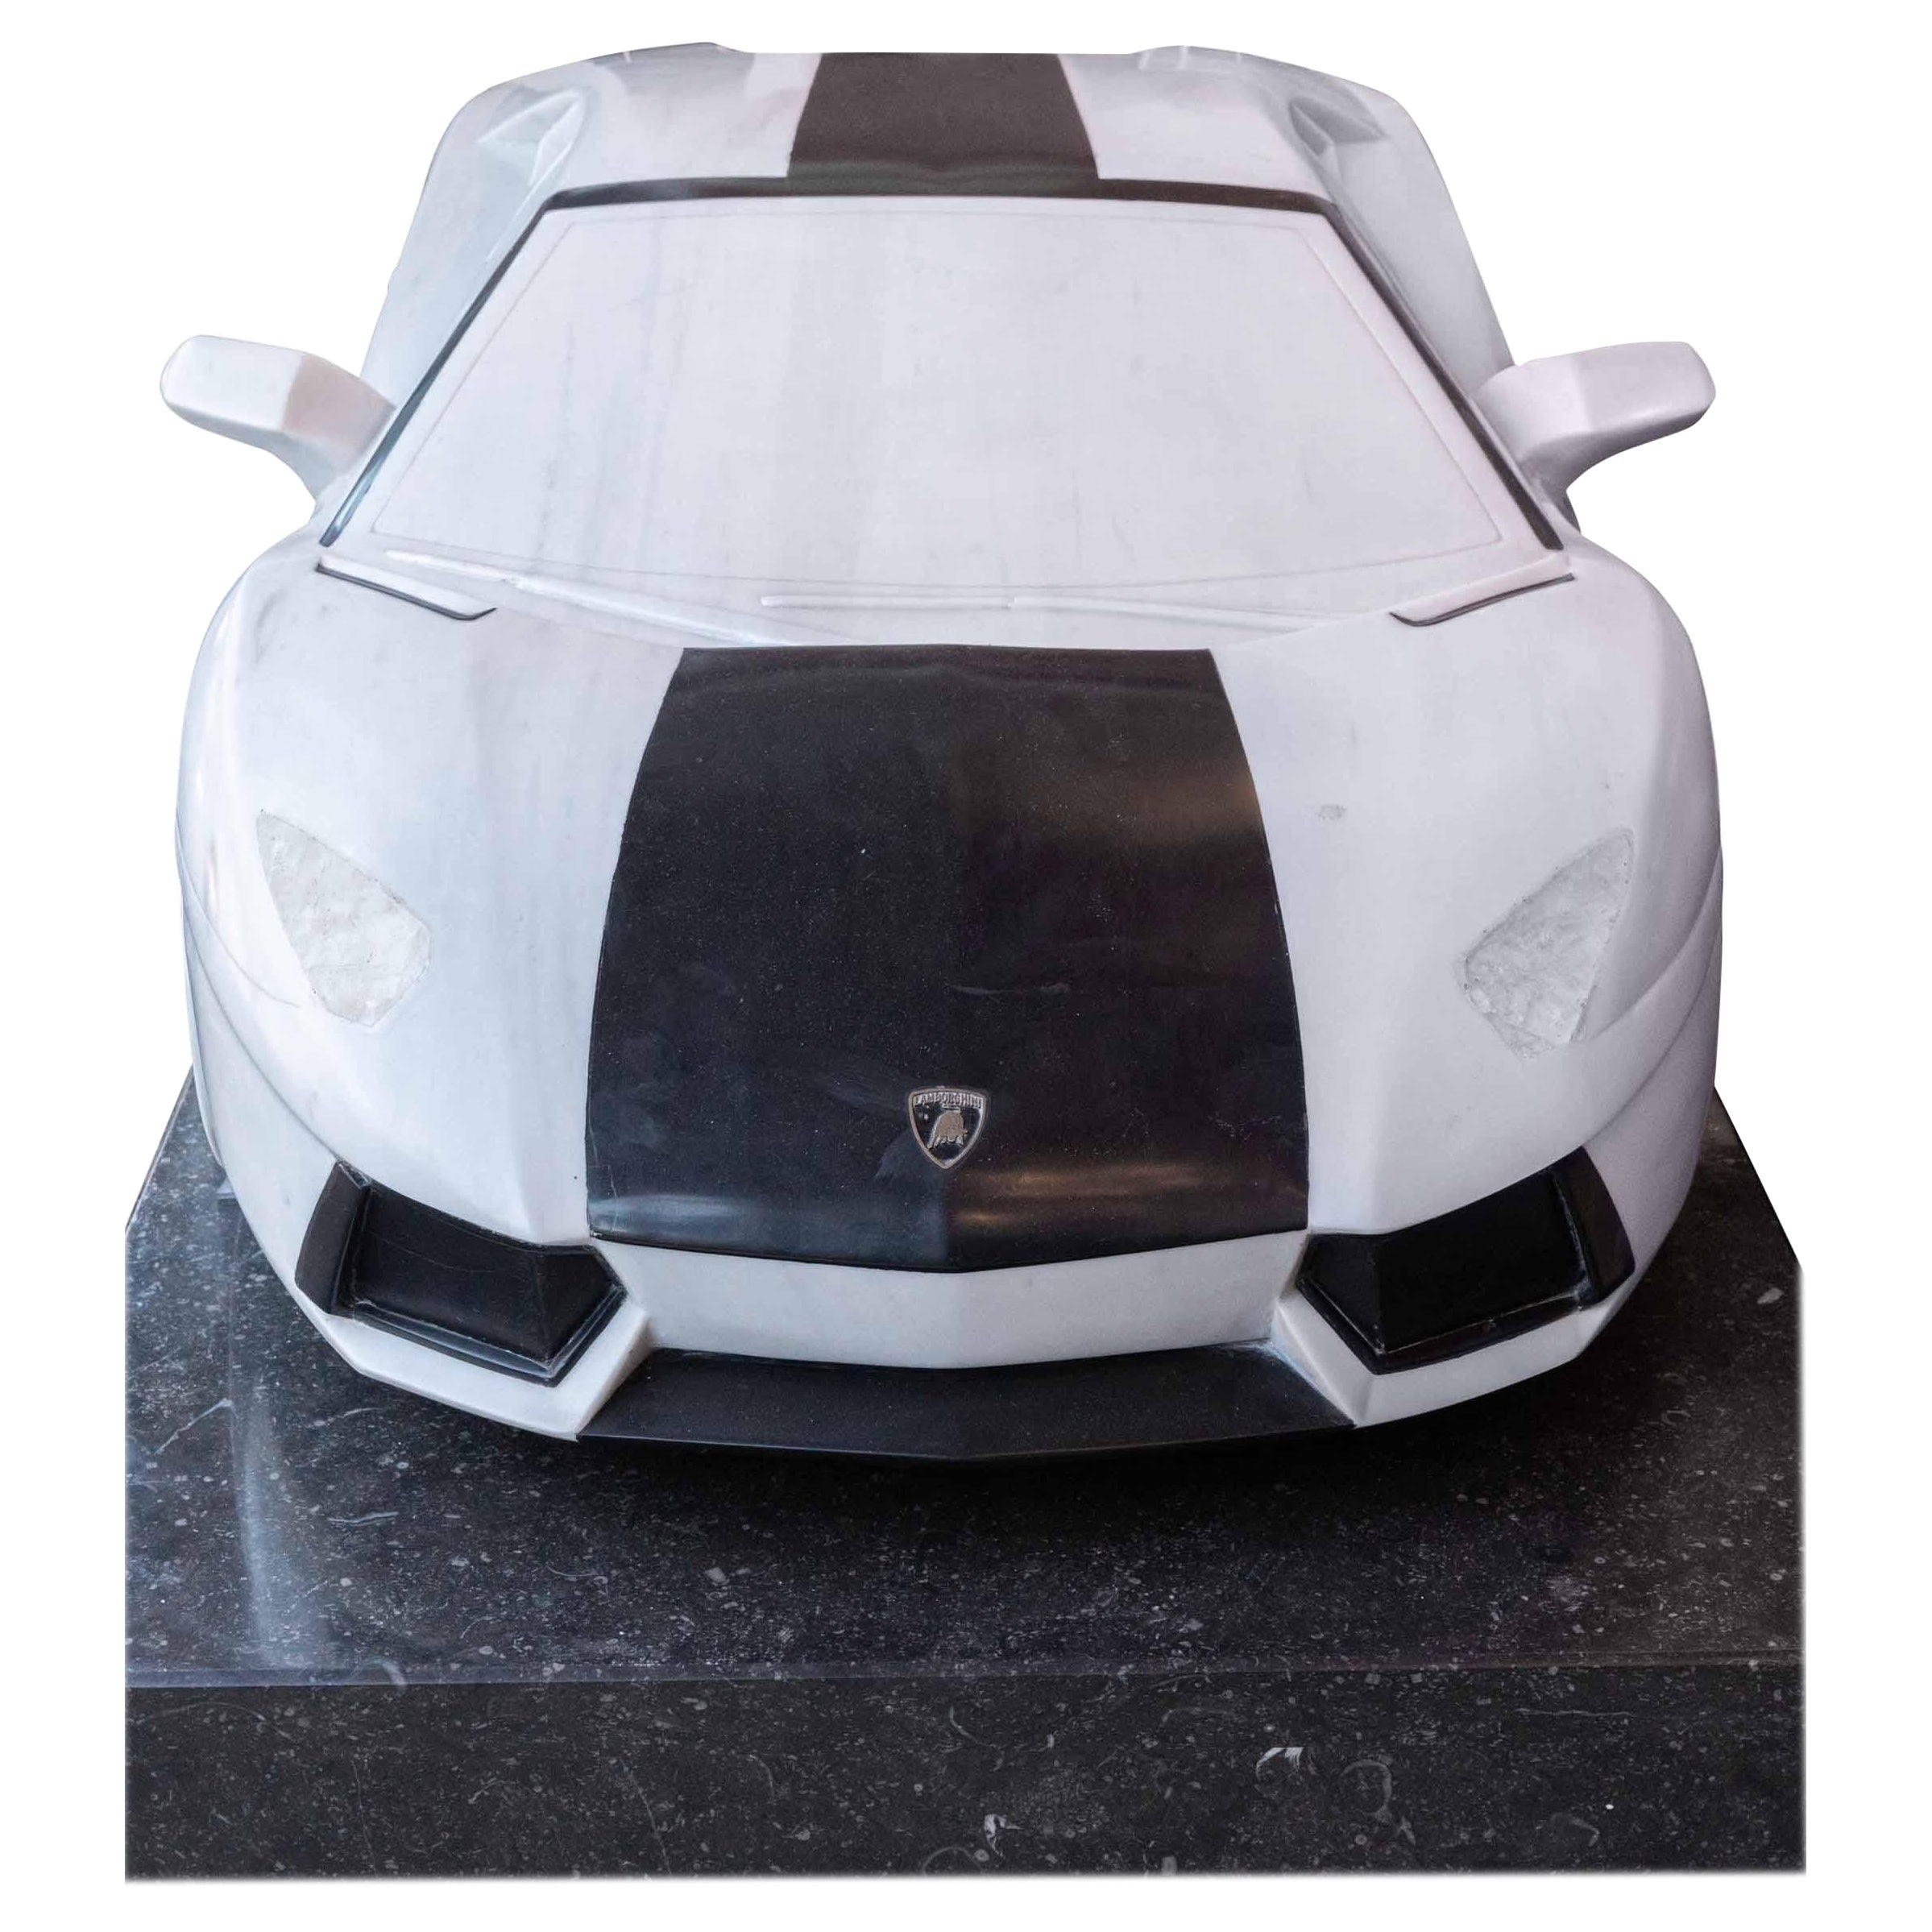 Christian Caudron, Lamborghini Adventador LP700-4 Sculpture, Marble Rock Crystal